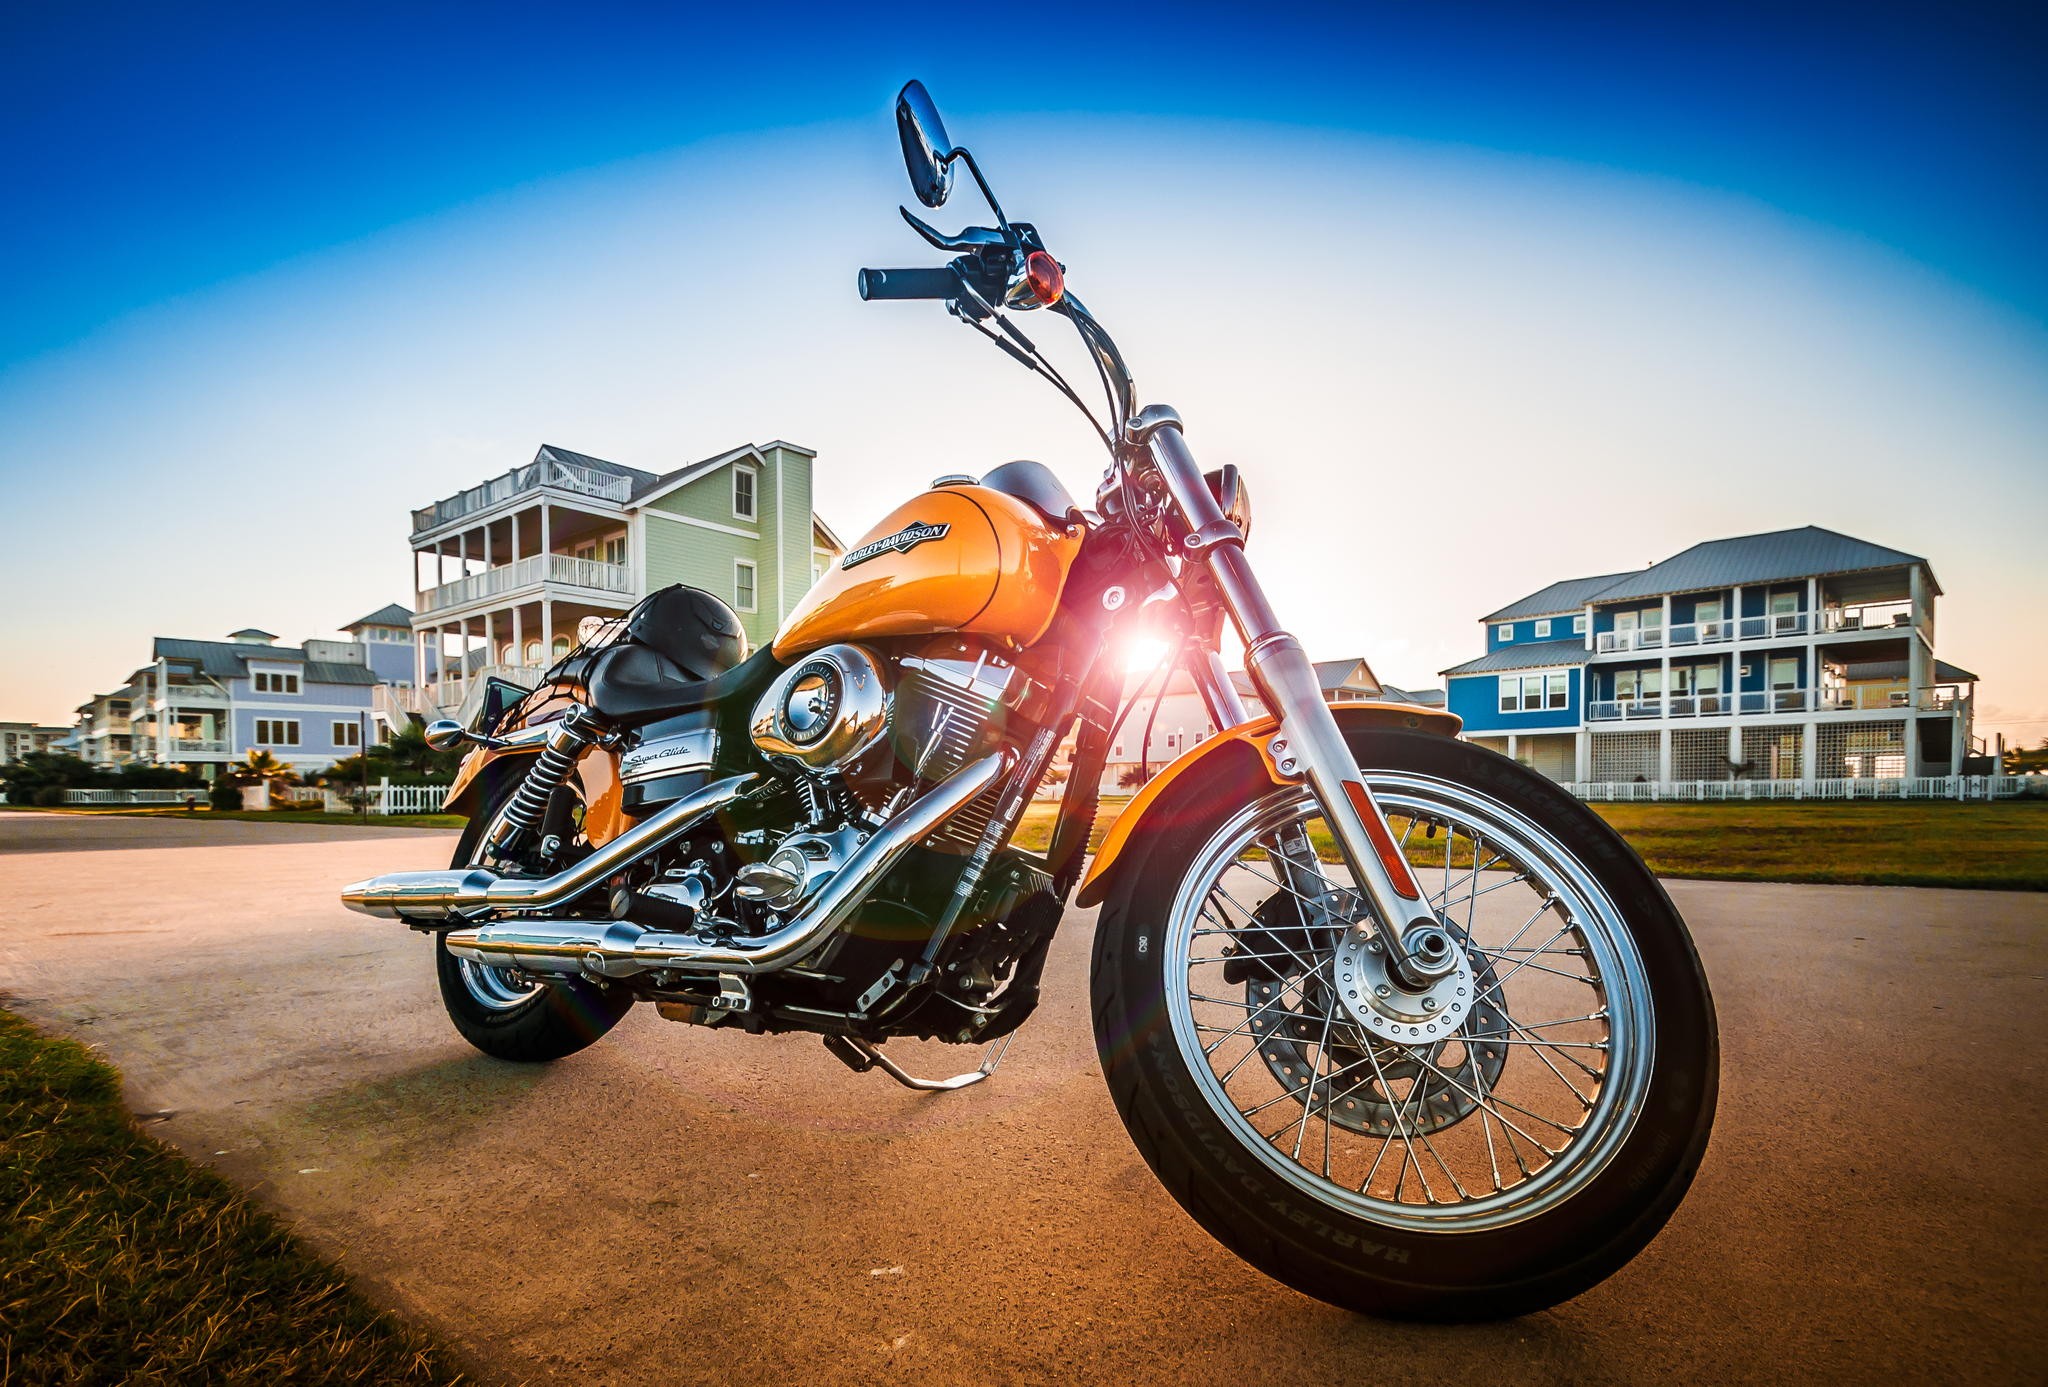 General 2048x1387 motorcycle Harley-Davidson vehicle Orange Motorcycles outdoors sunlight urban American motorcycles